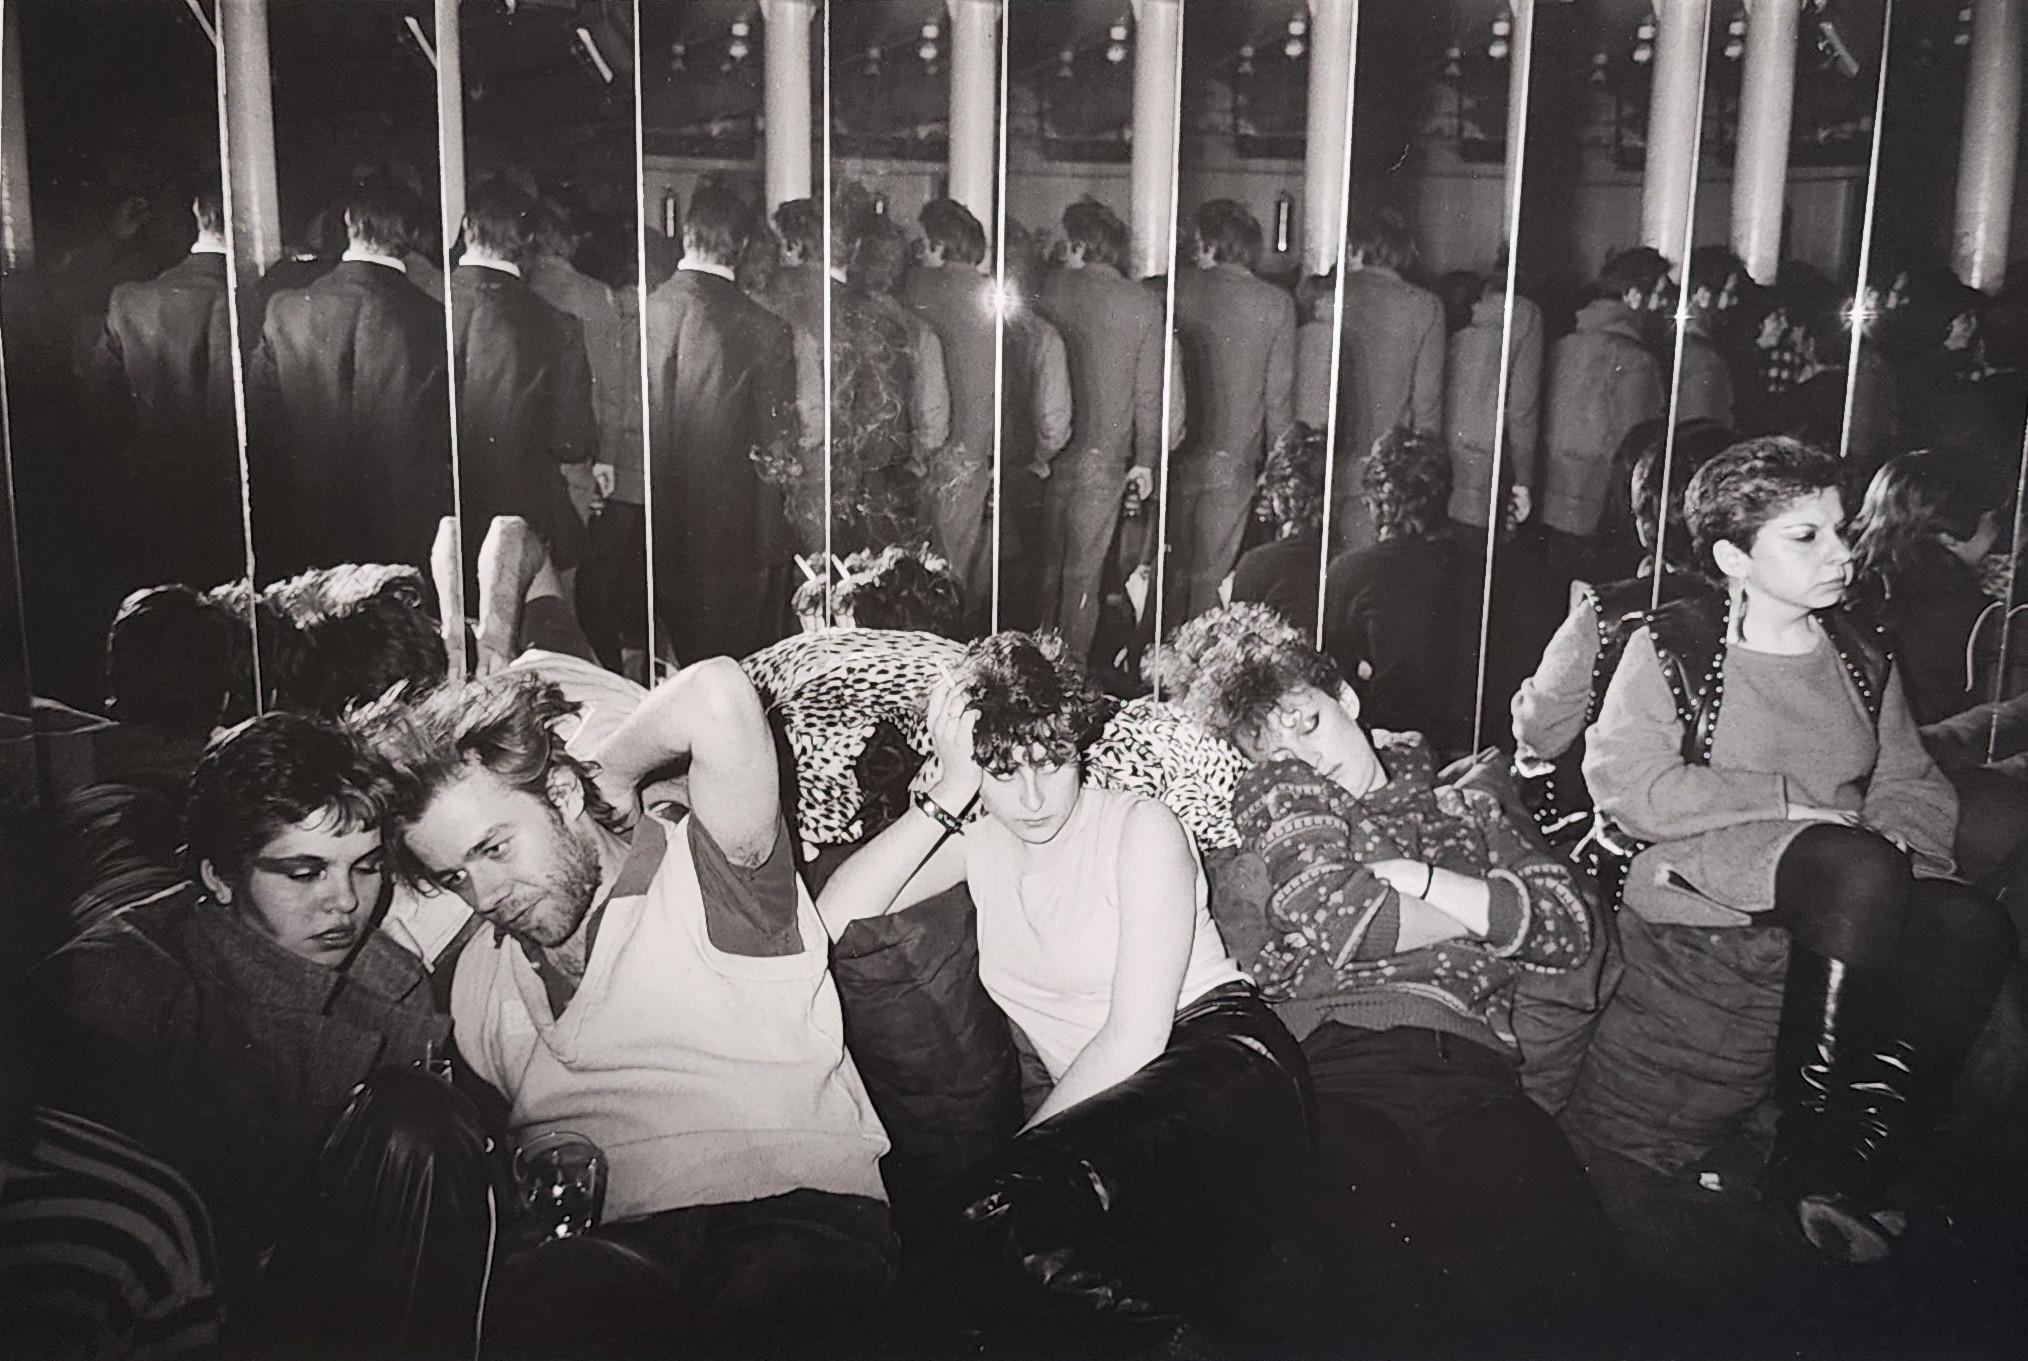 Joe Kelly Black and White Photograph - Harrahs (Black and White, Photography, Disco, Iconic, Studio 54, Wasted, Party)